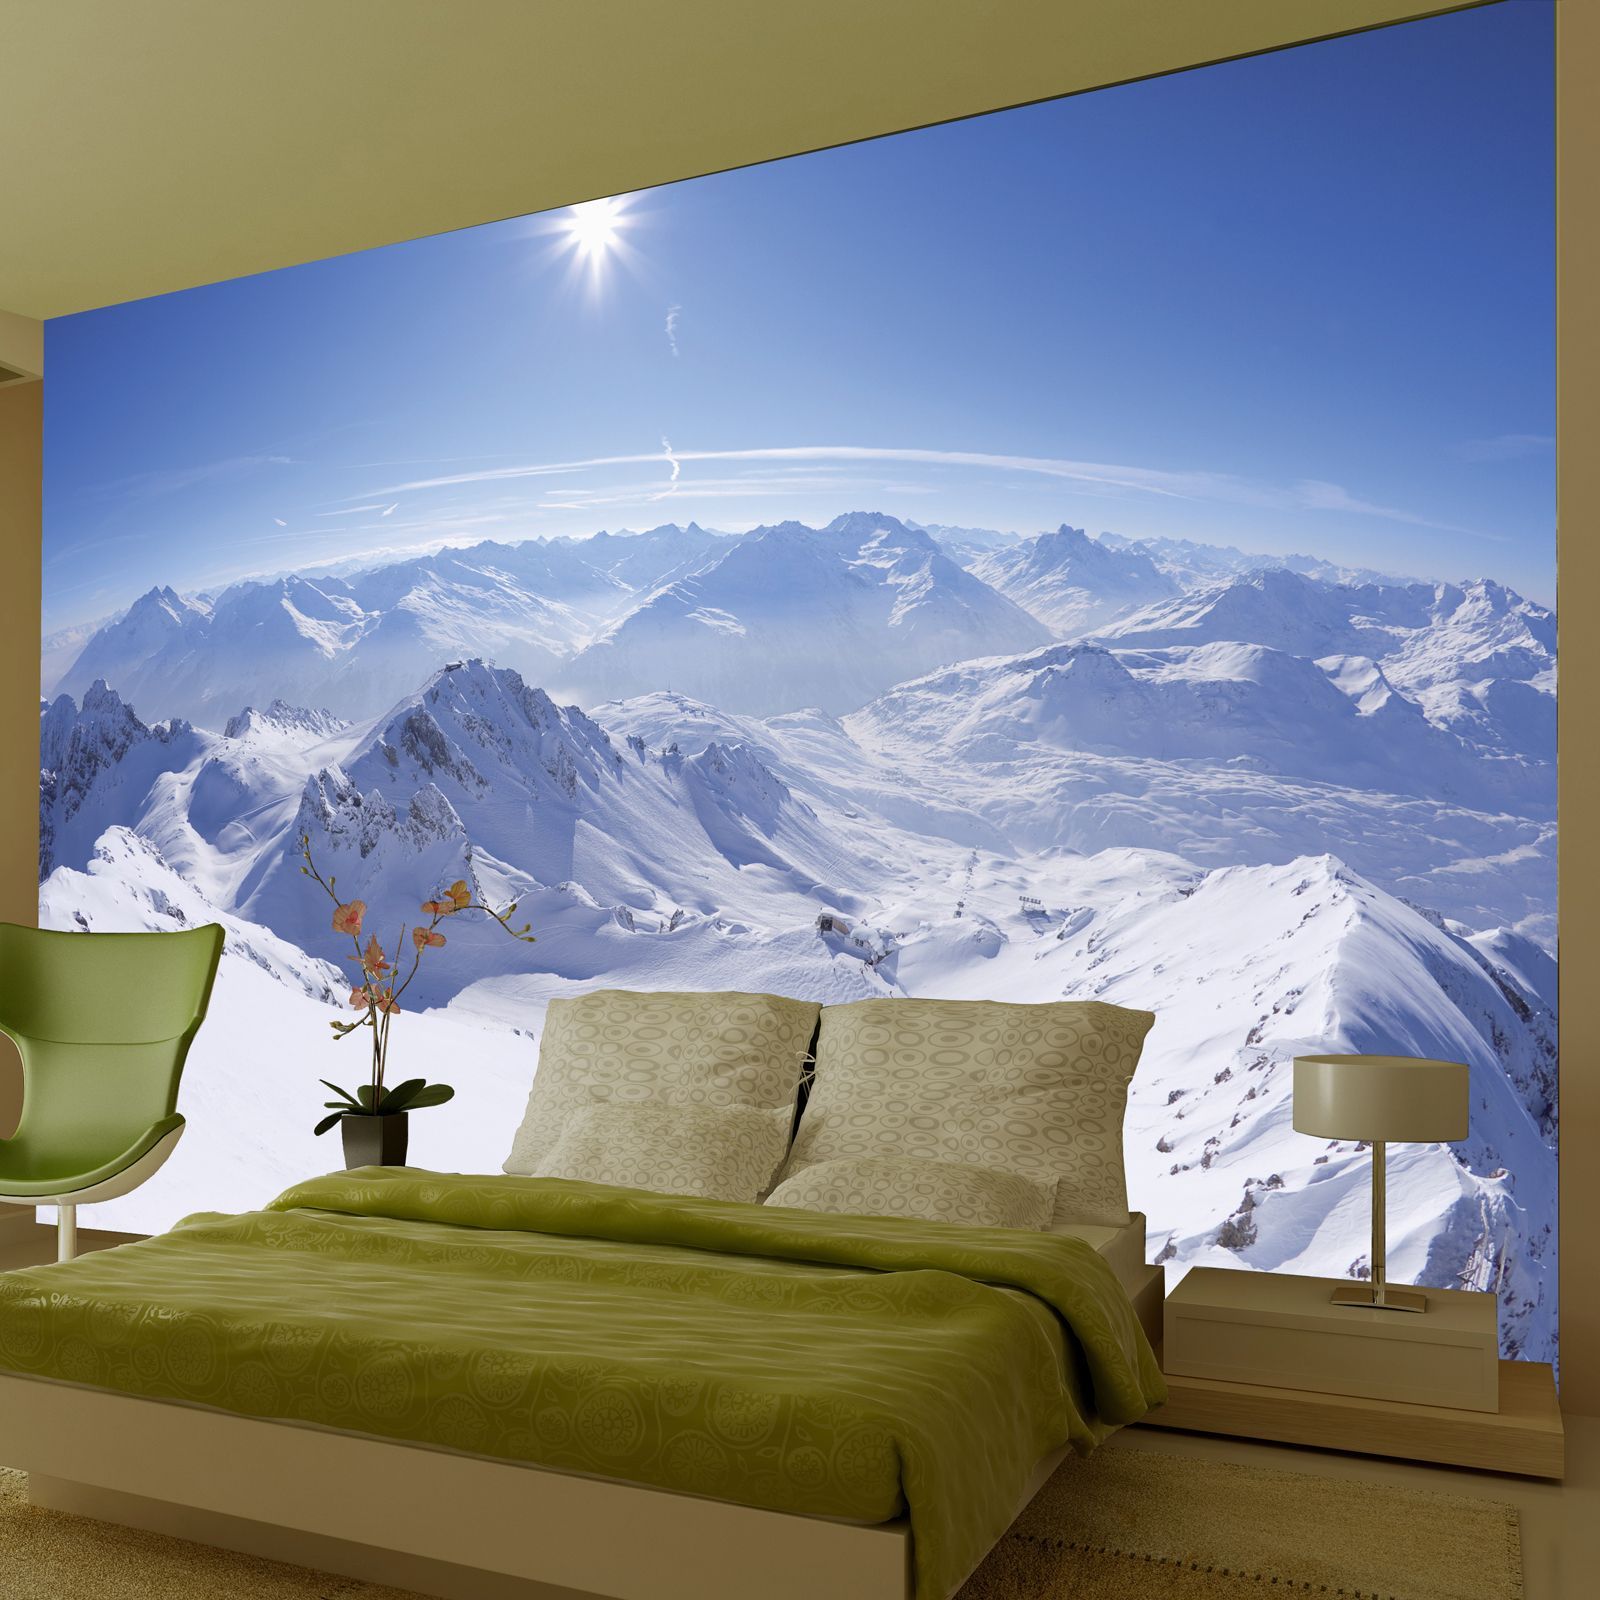 wallpaper scenes for walls,natural landscape,mountain,mountainous landforms,mural,sky